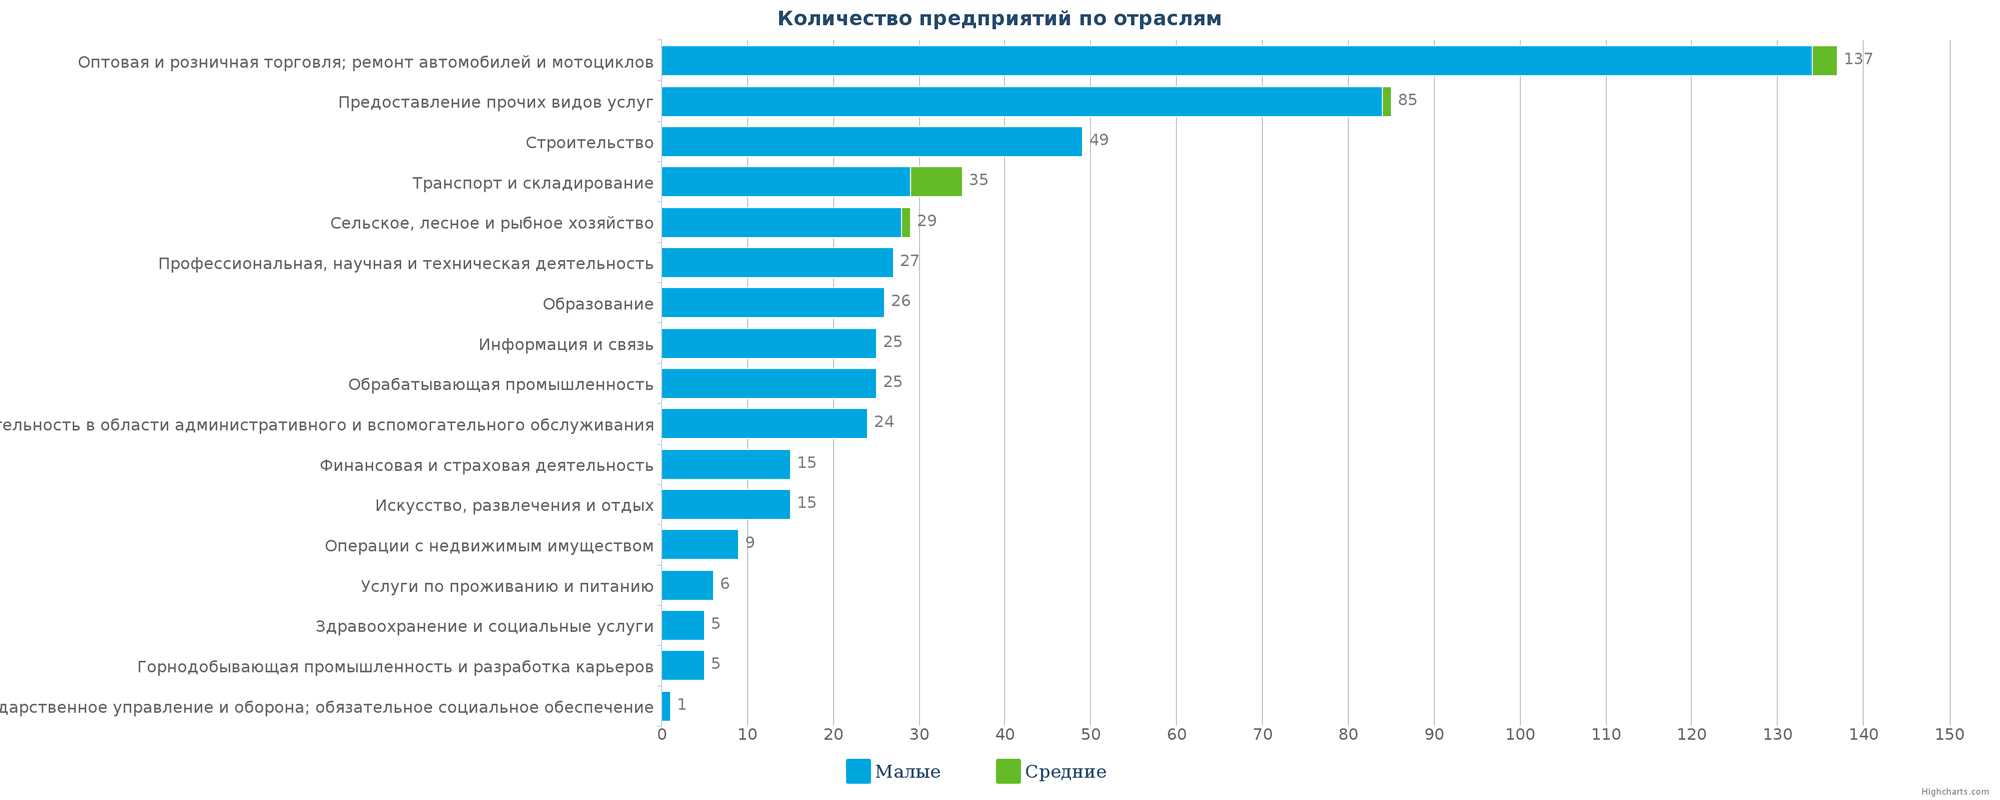 Новые предприятия в базе данных Казахстана